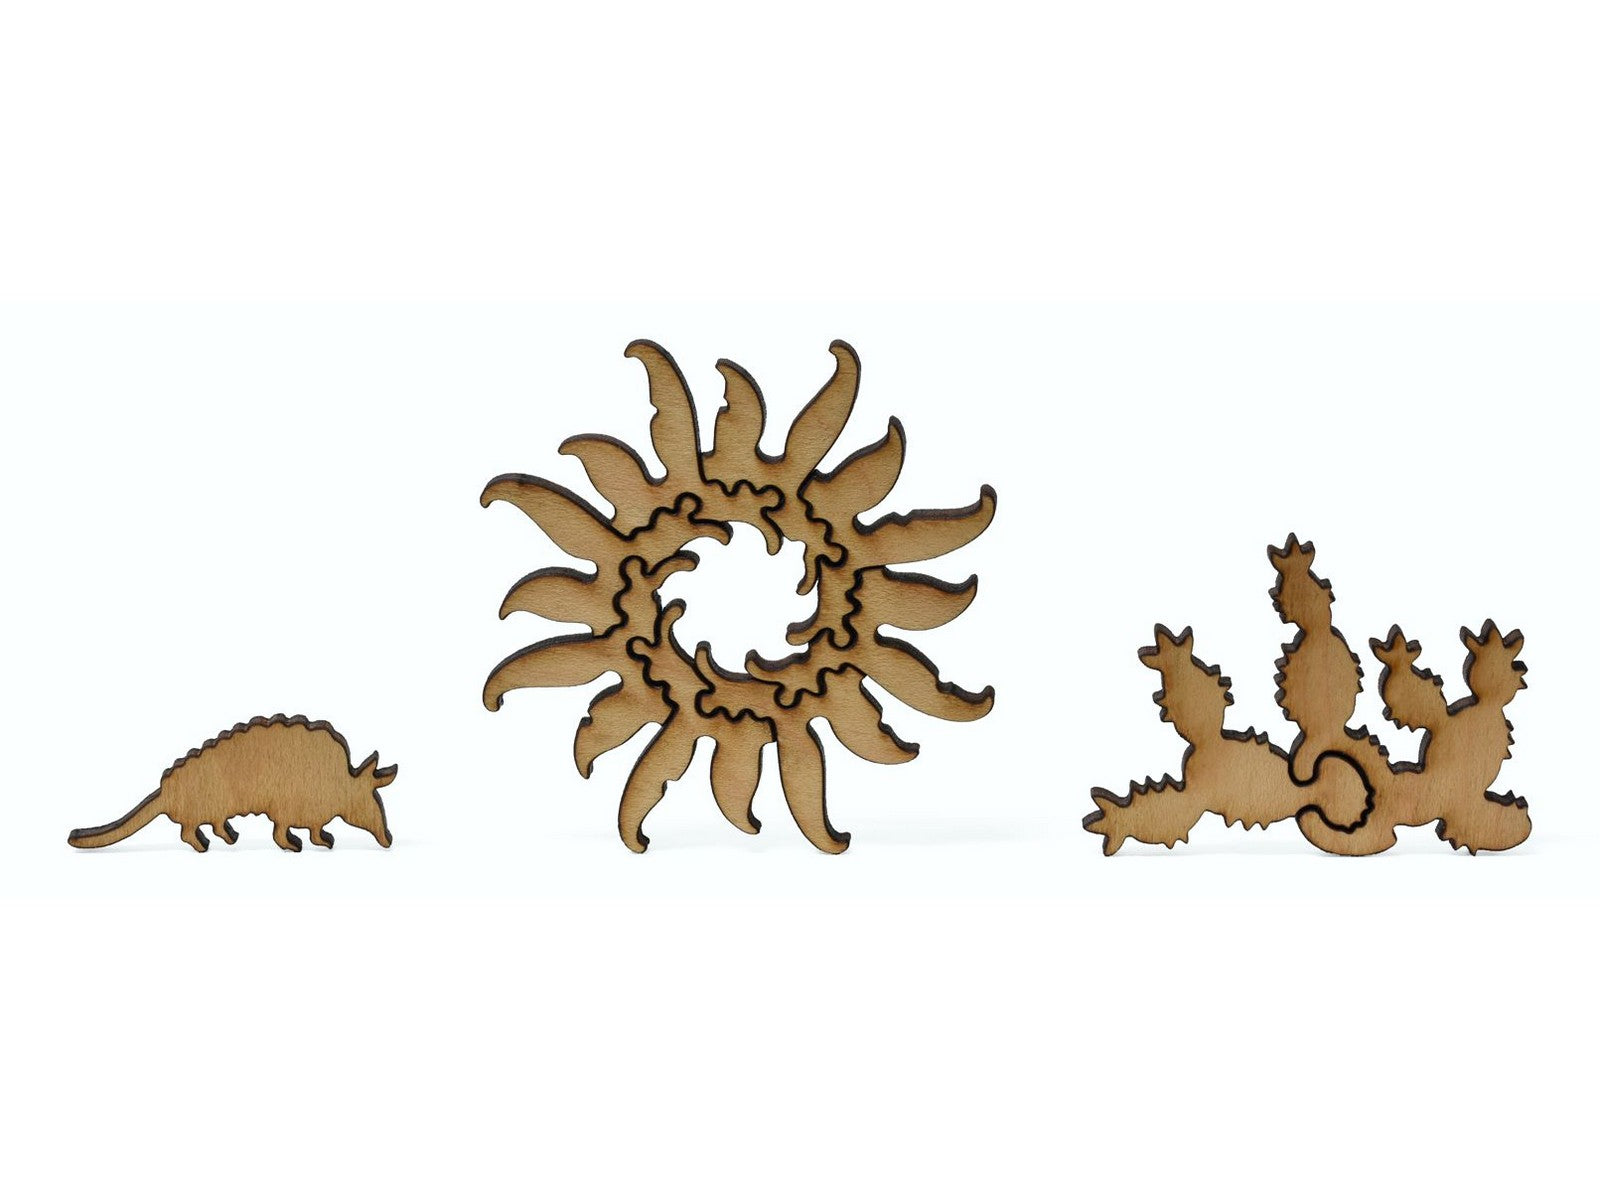 A closeup of pieces showing an armadillo, cactus, and sun.